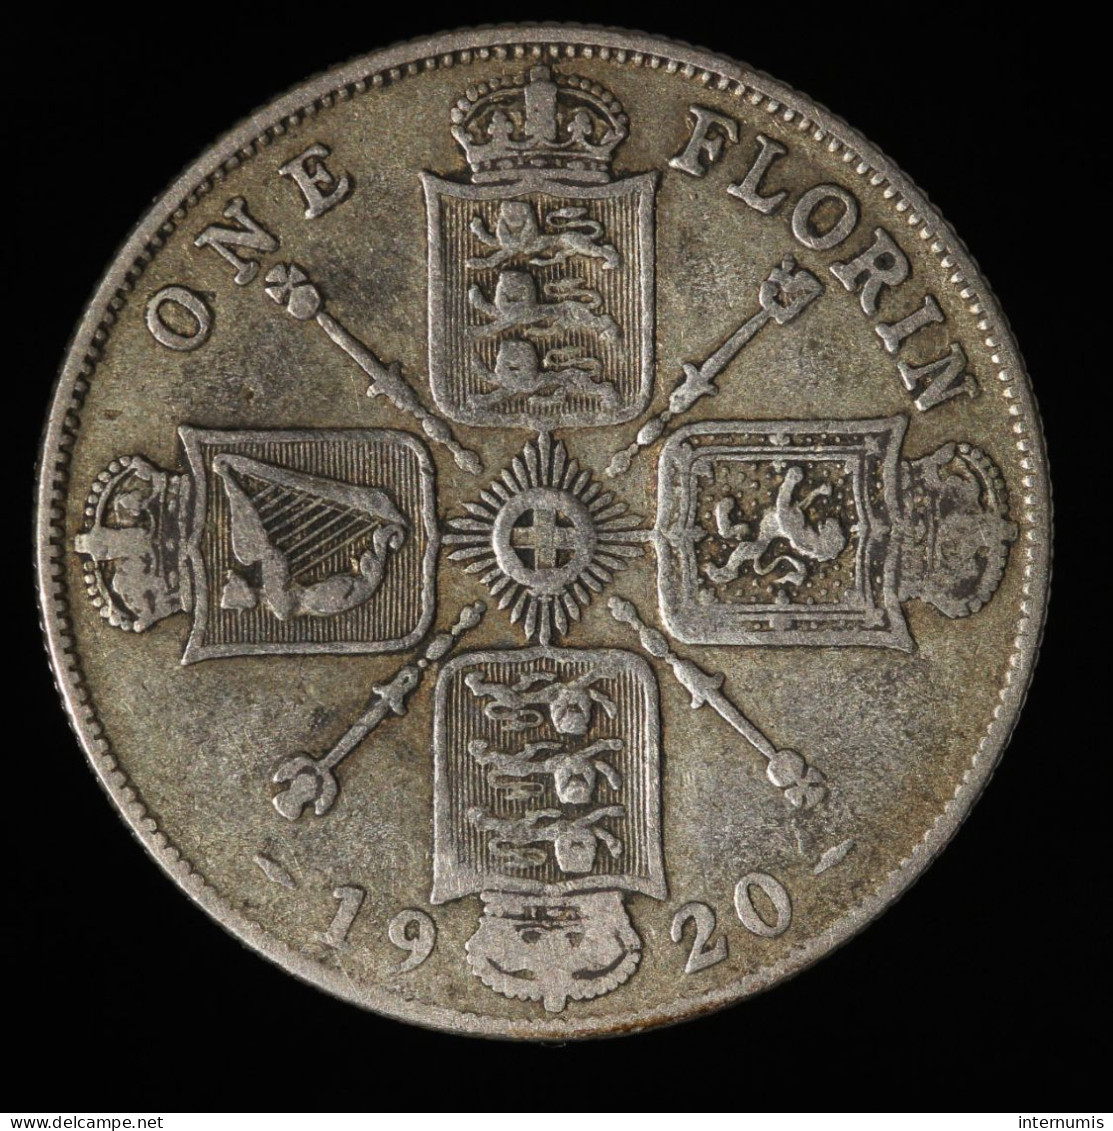  Grande-Bretagne / United Kingdom, George V, 1 Florin, 1920, , Argent (Silver), TB+ (VF),
KM#817a - J. 1 Florin / 2 Schillings